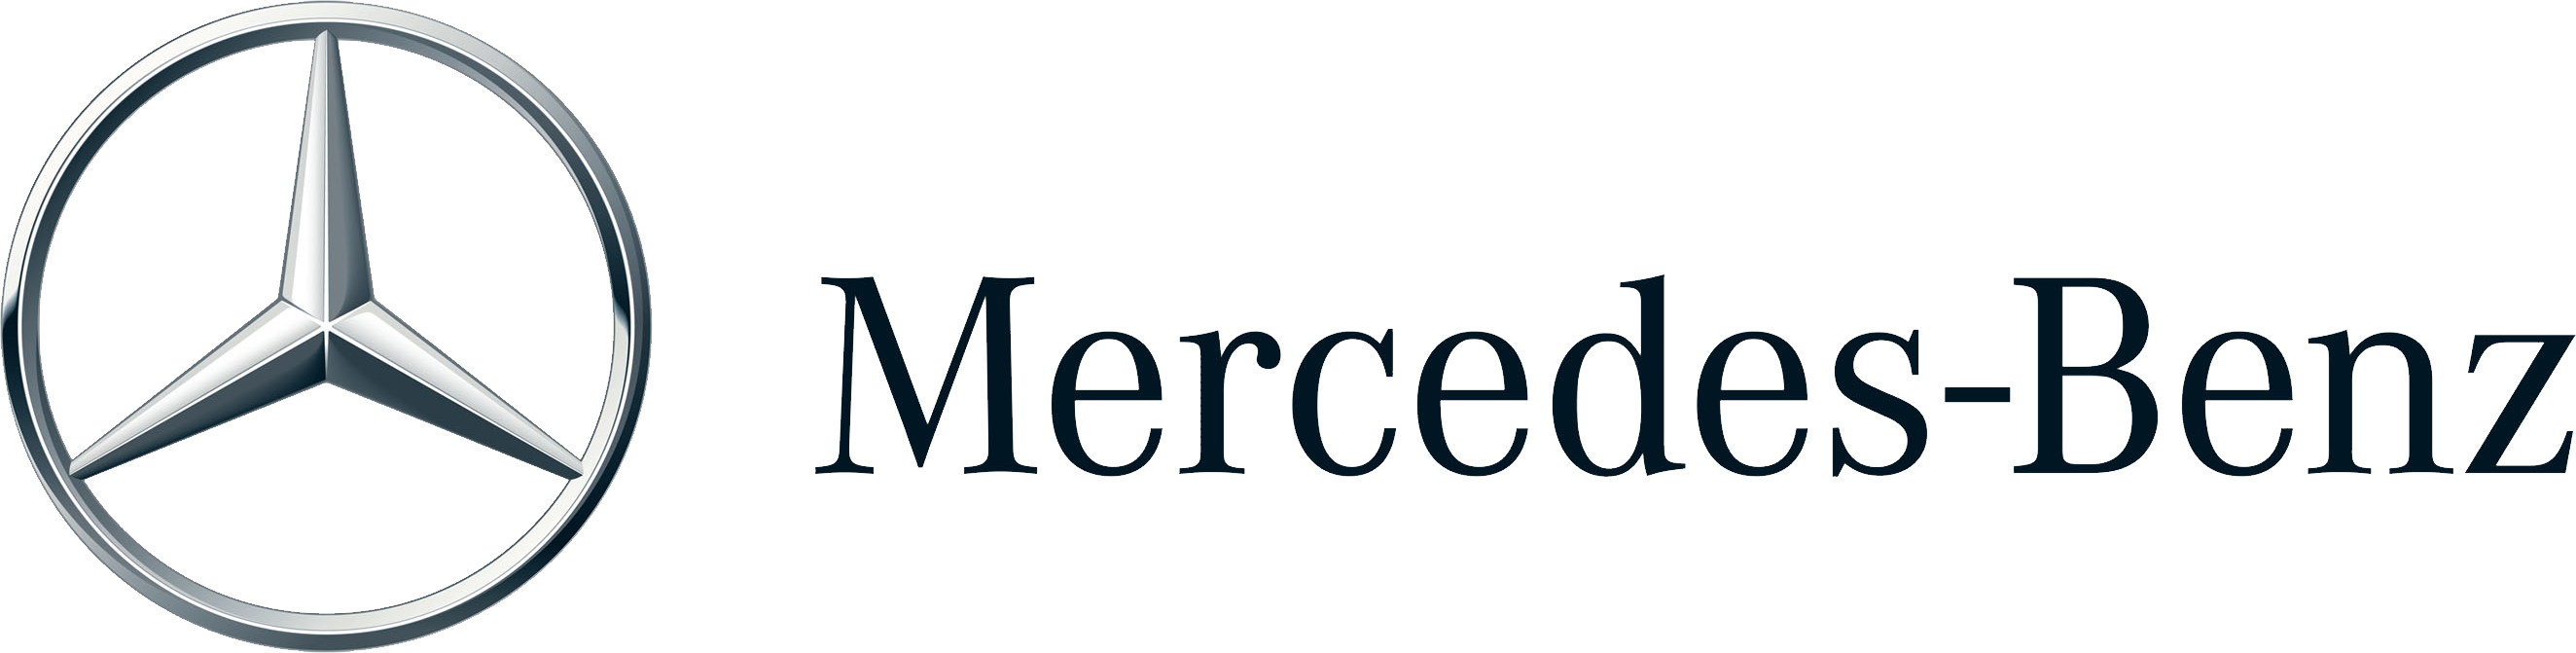 Logo Mercedes-Benz Gambar Transparan